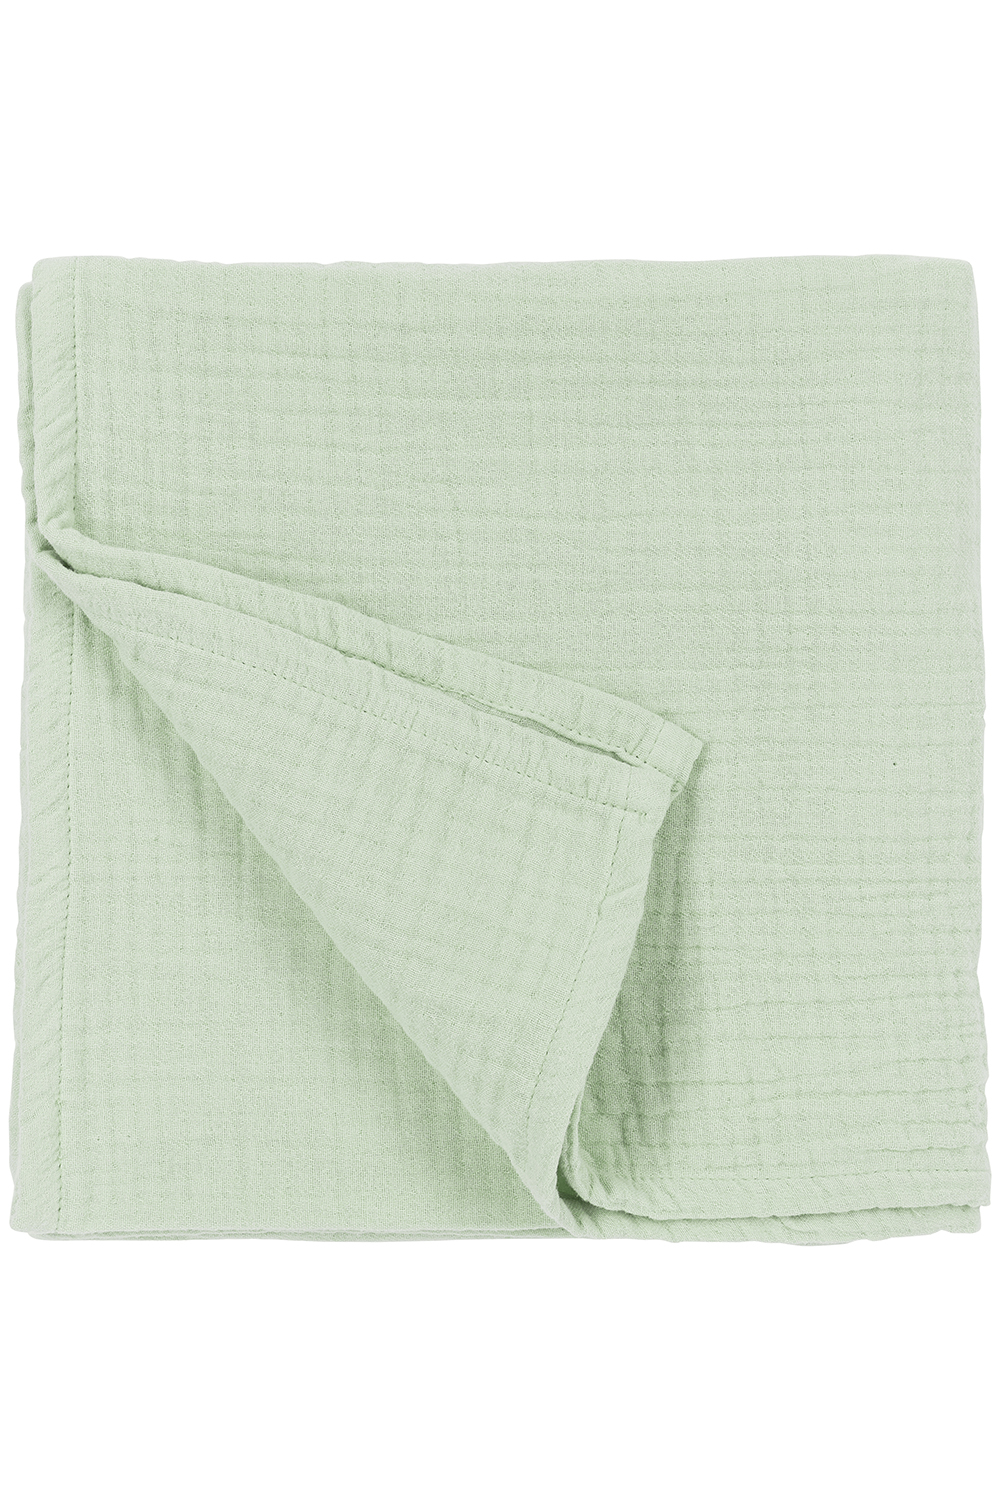 Blanket muslin Uni - soft green - 140x200cm